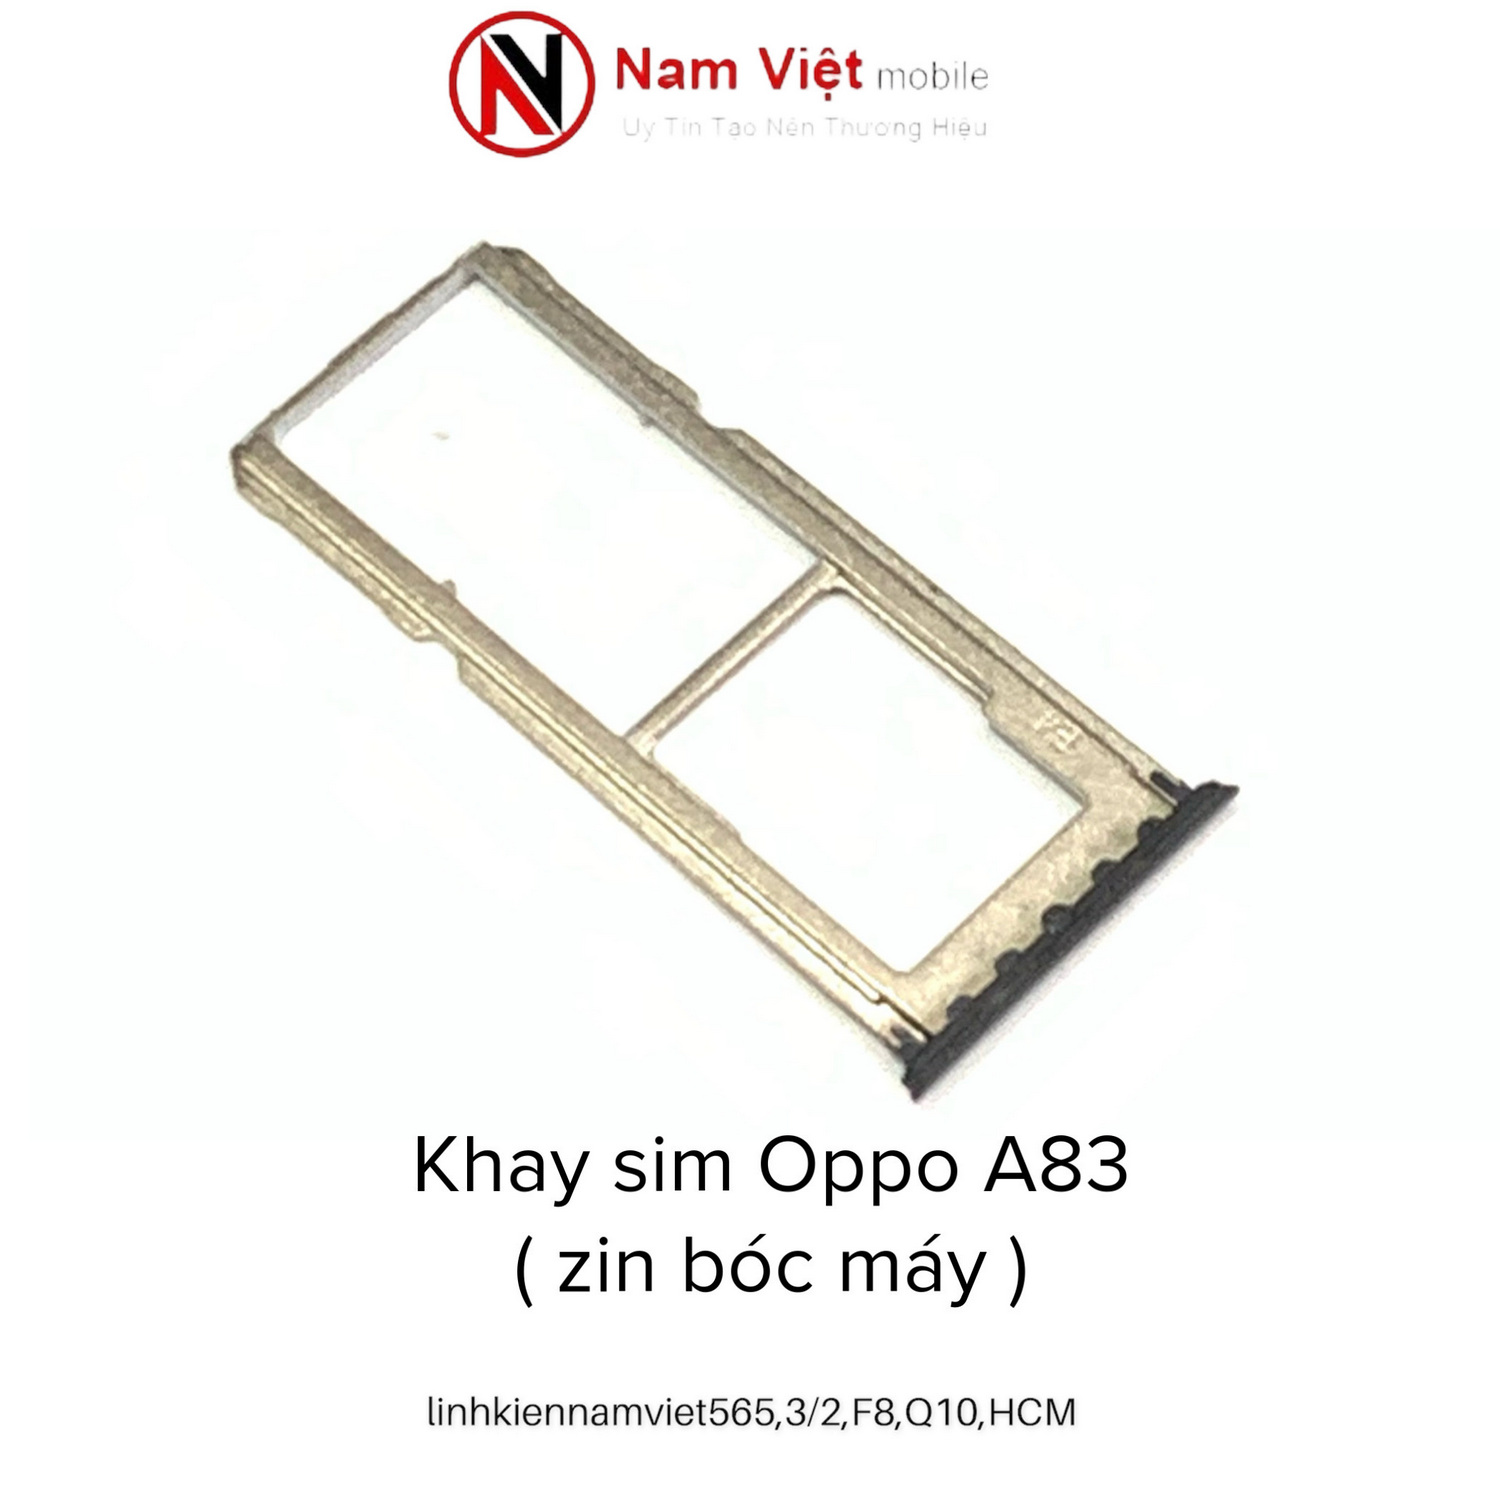 Khay sim Oppo A83